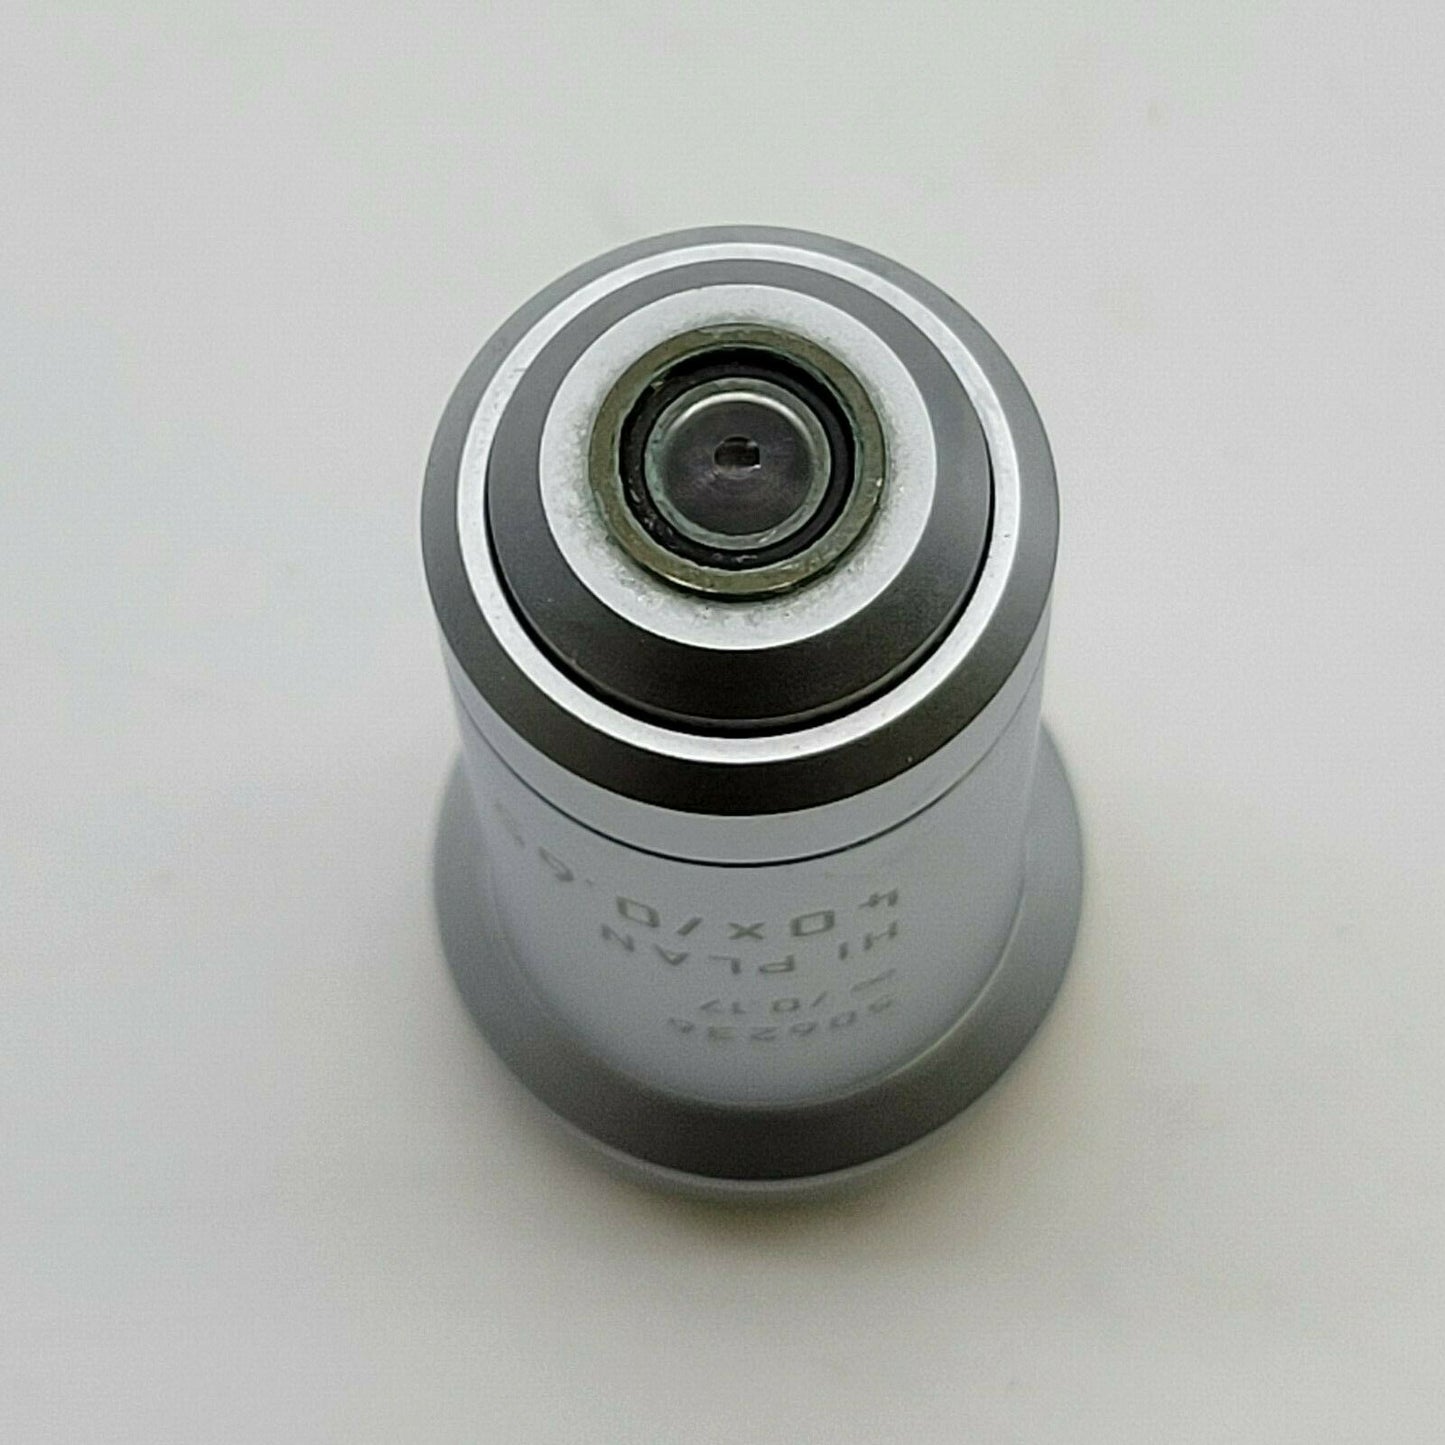 Leica Microscope Objective HI Plan 40x ∞/0.17  506236 - microscopemarketplace